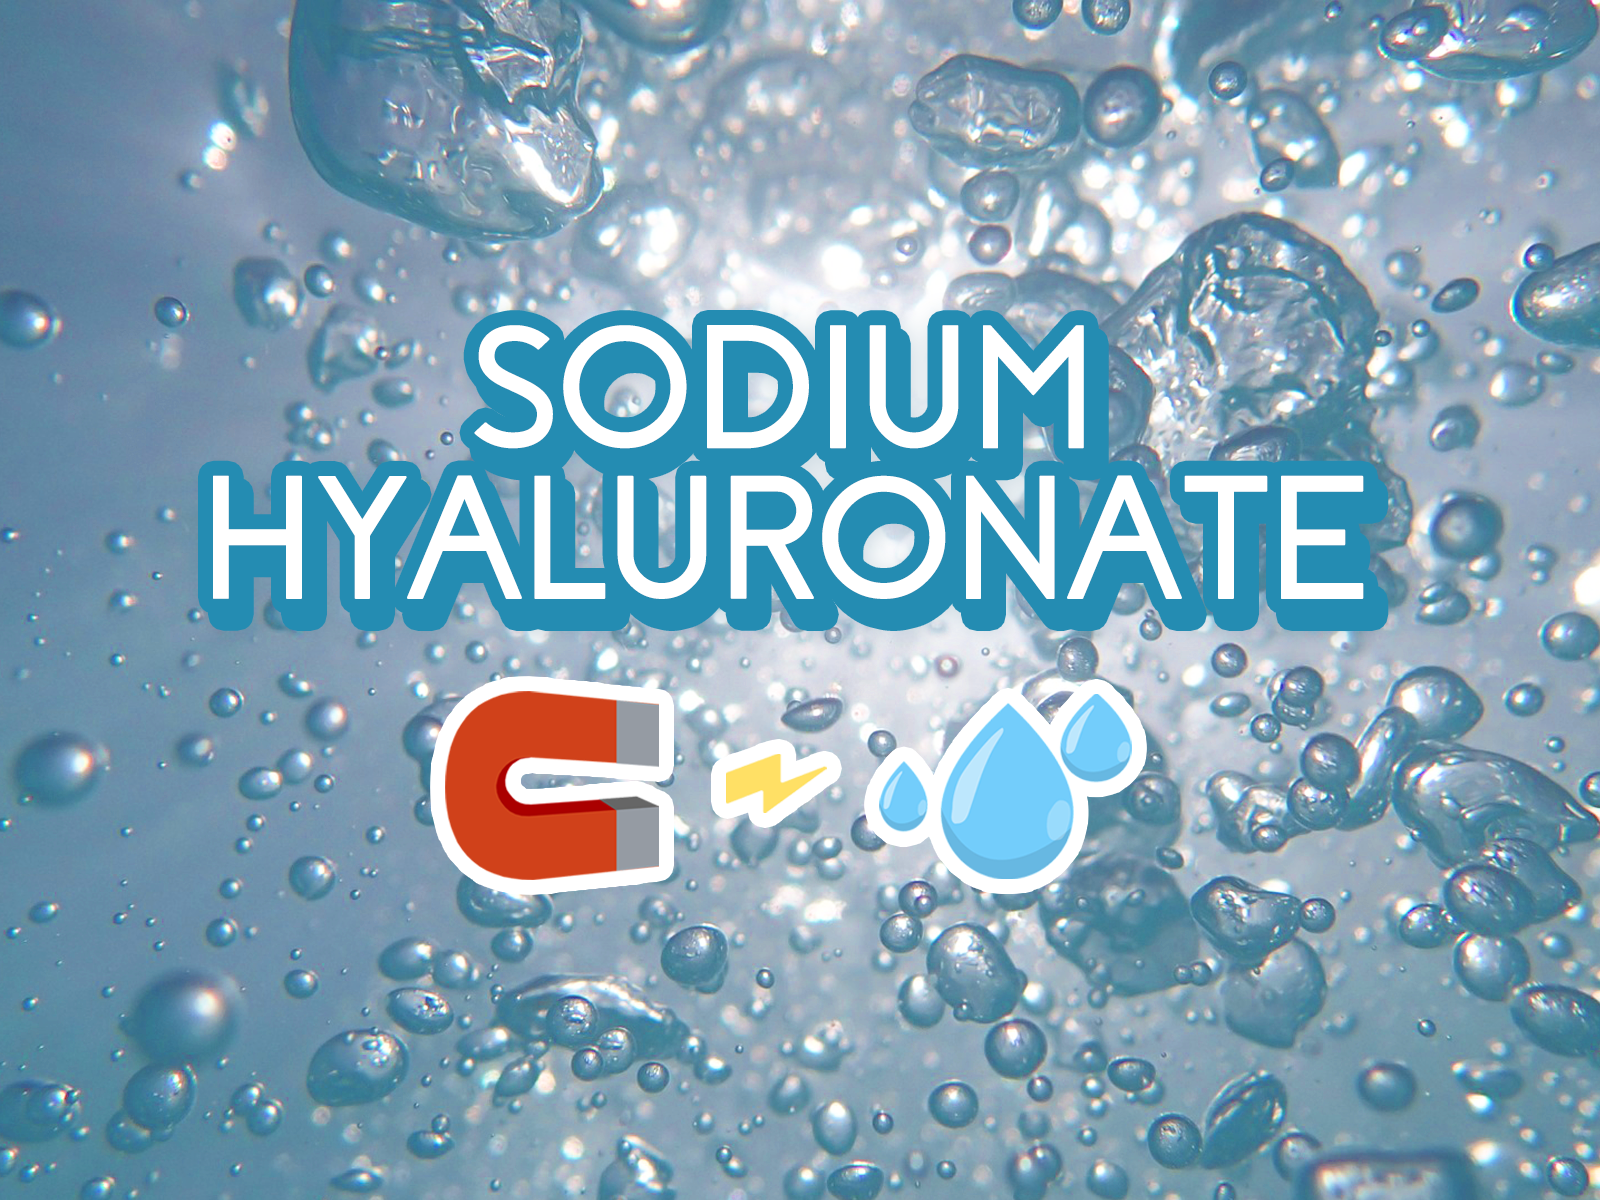 Sodium Hyaluronate - A Powerful Moisture Magnet!